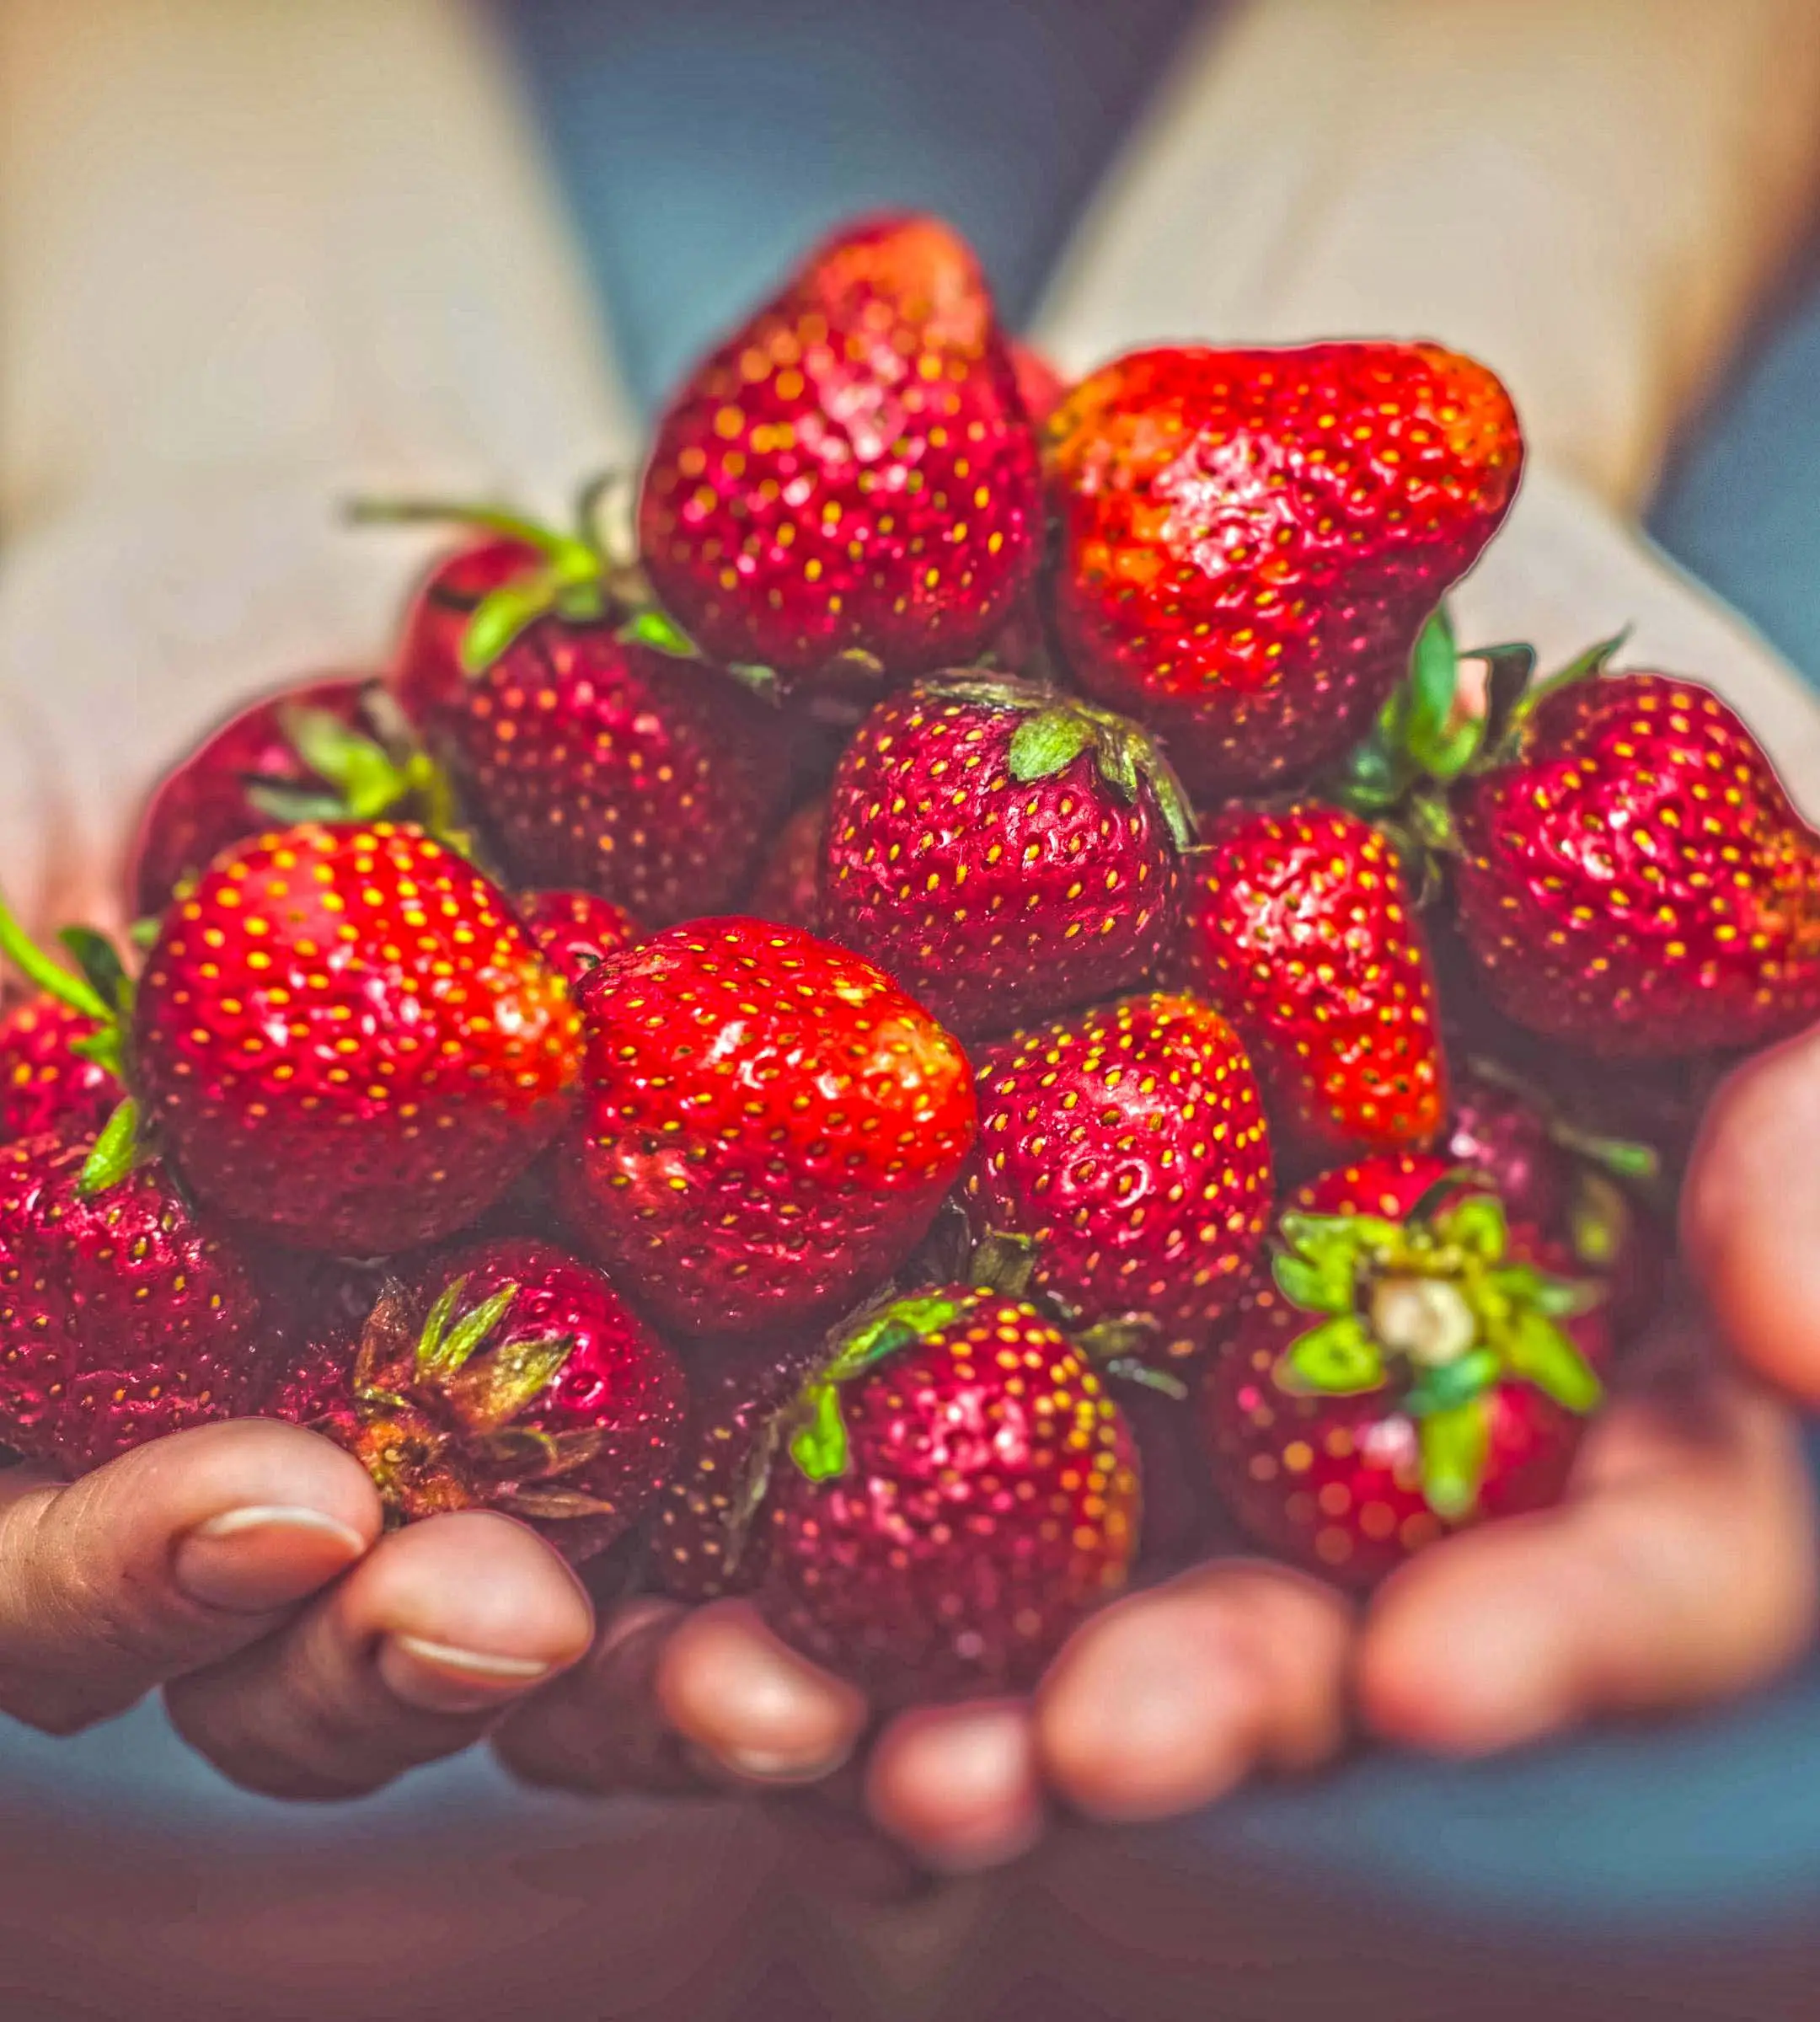 Strawberries on hand